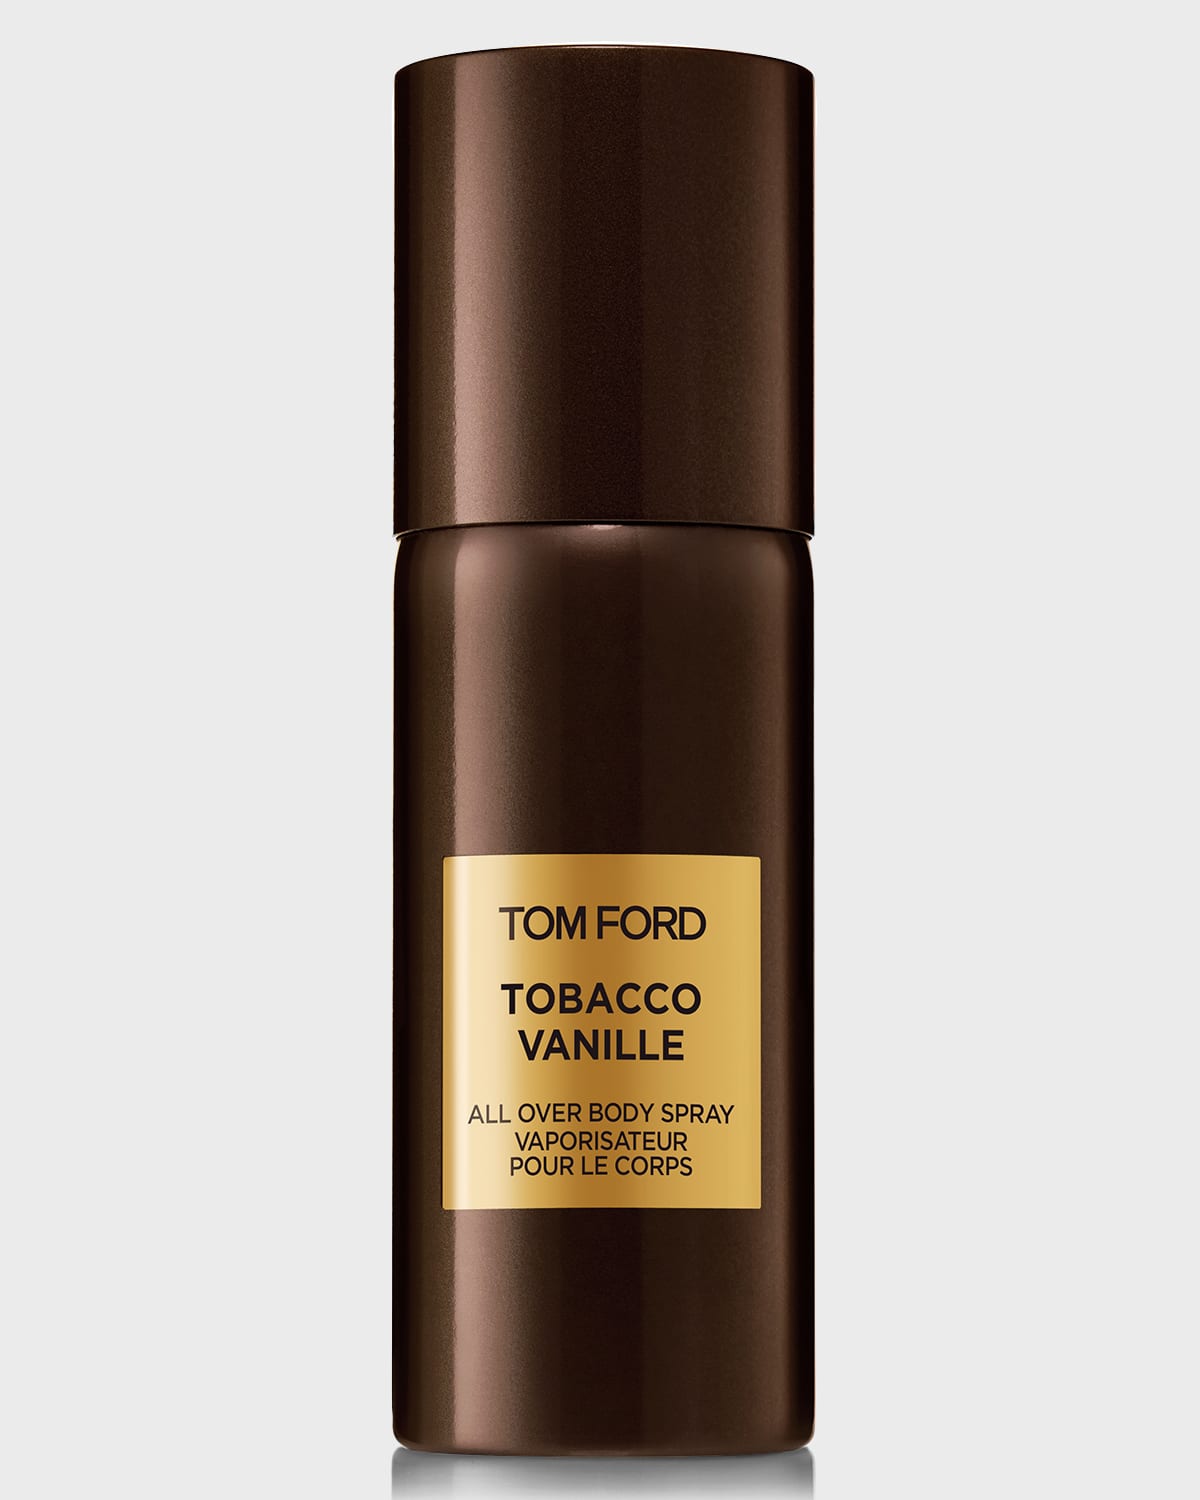 TOM FORD Tobacco Vanille All Over Body Spray, 5.0 oz./ 150 mL